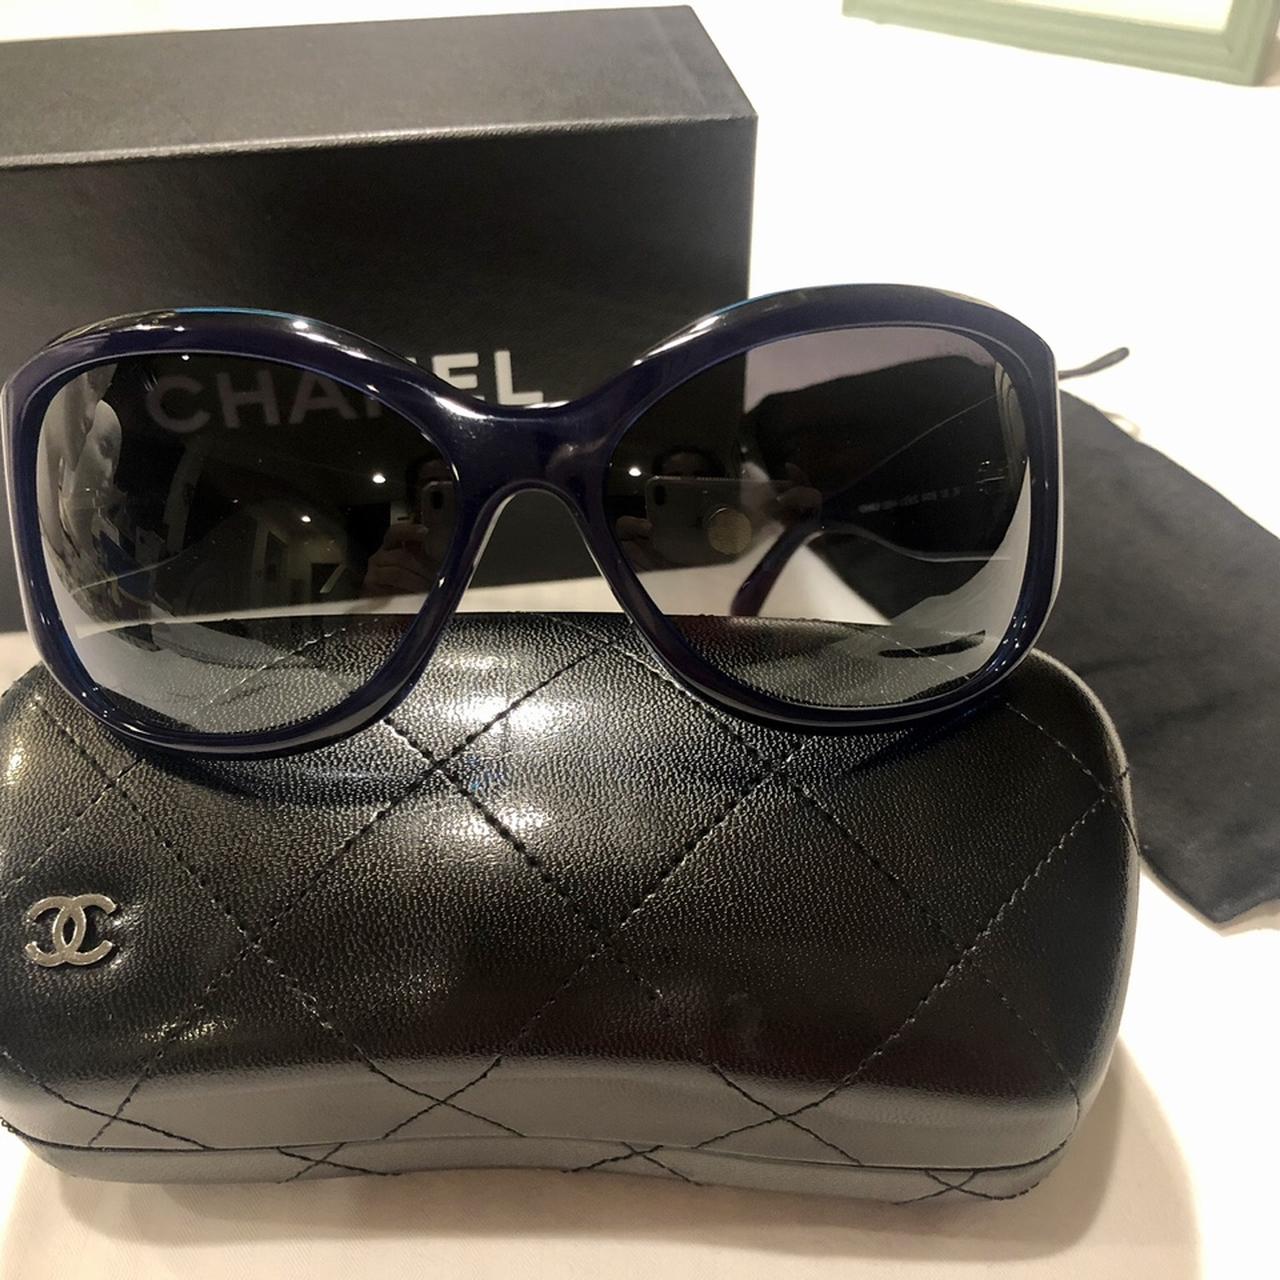 CHANEL SUNGLASSES 🕶 NEW 64-16-125, Beautiful Chanel